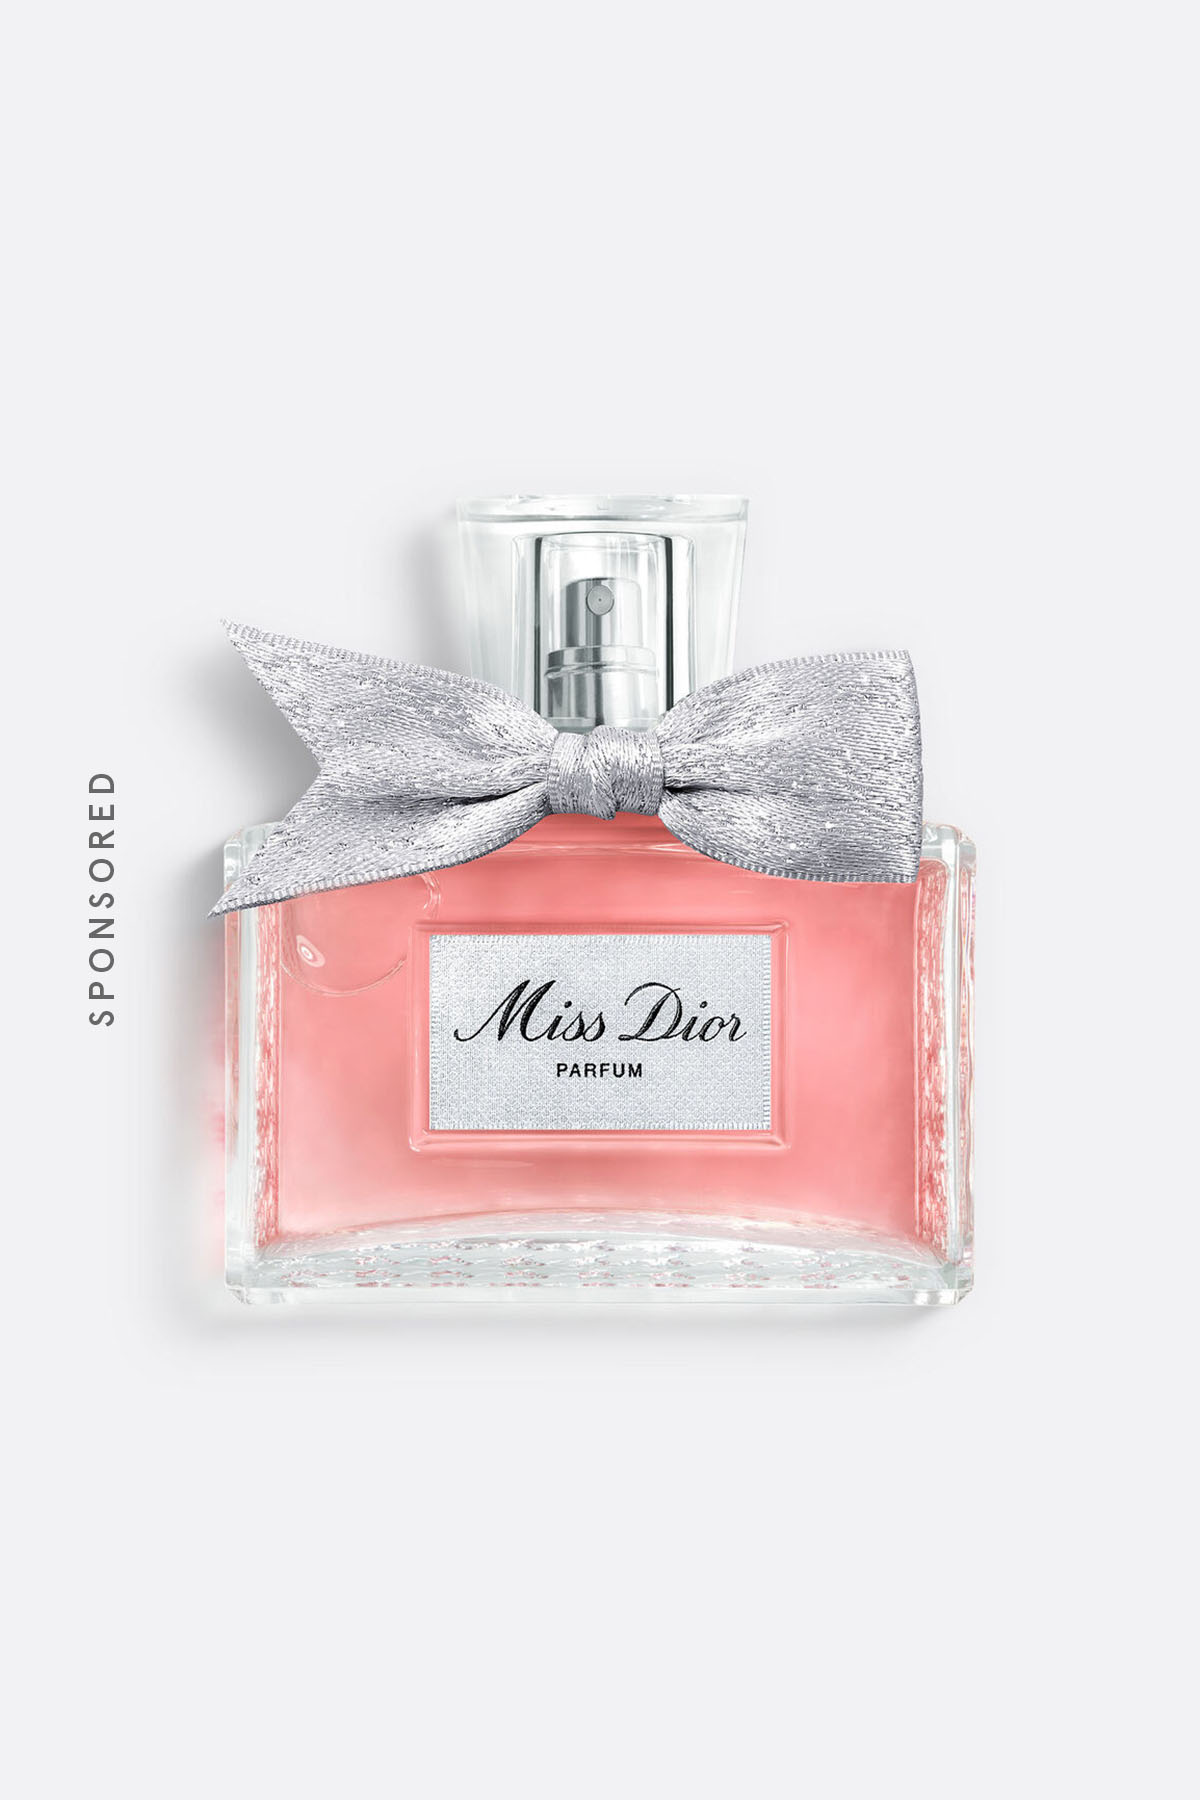 Miss Dior Parfum fragrance